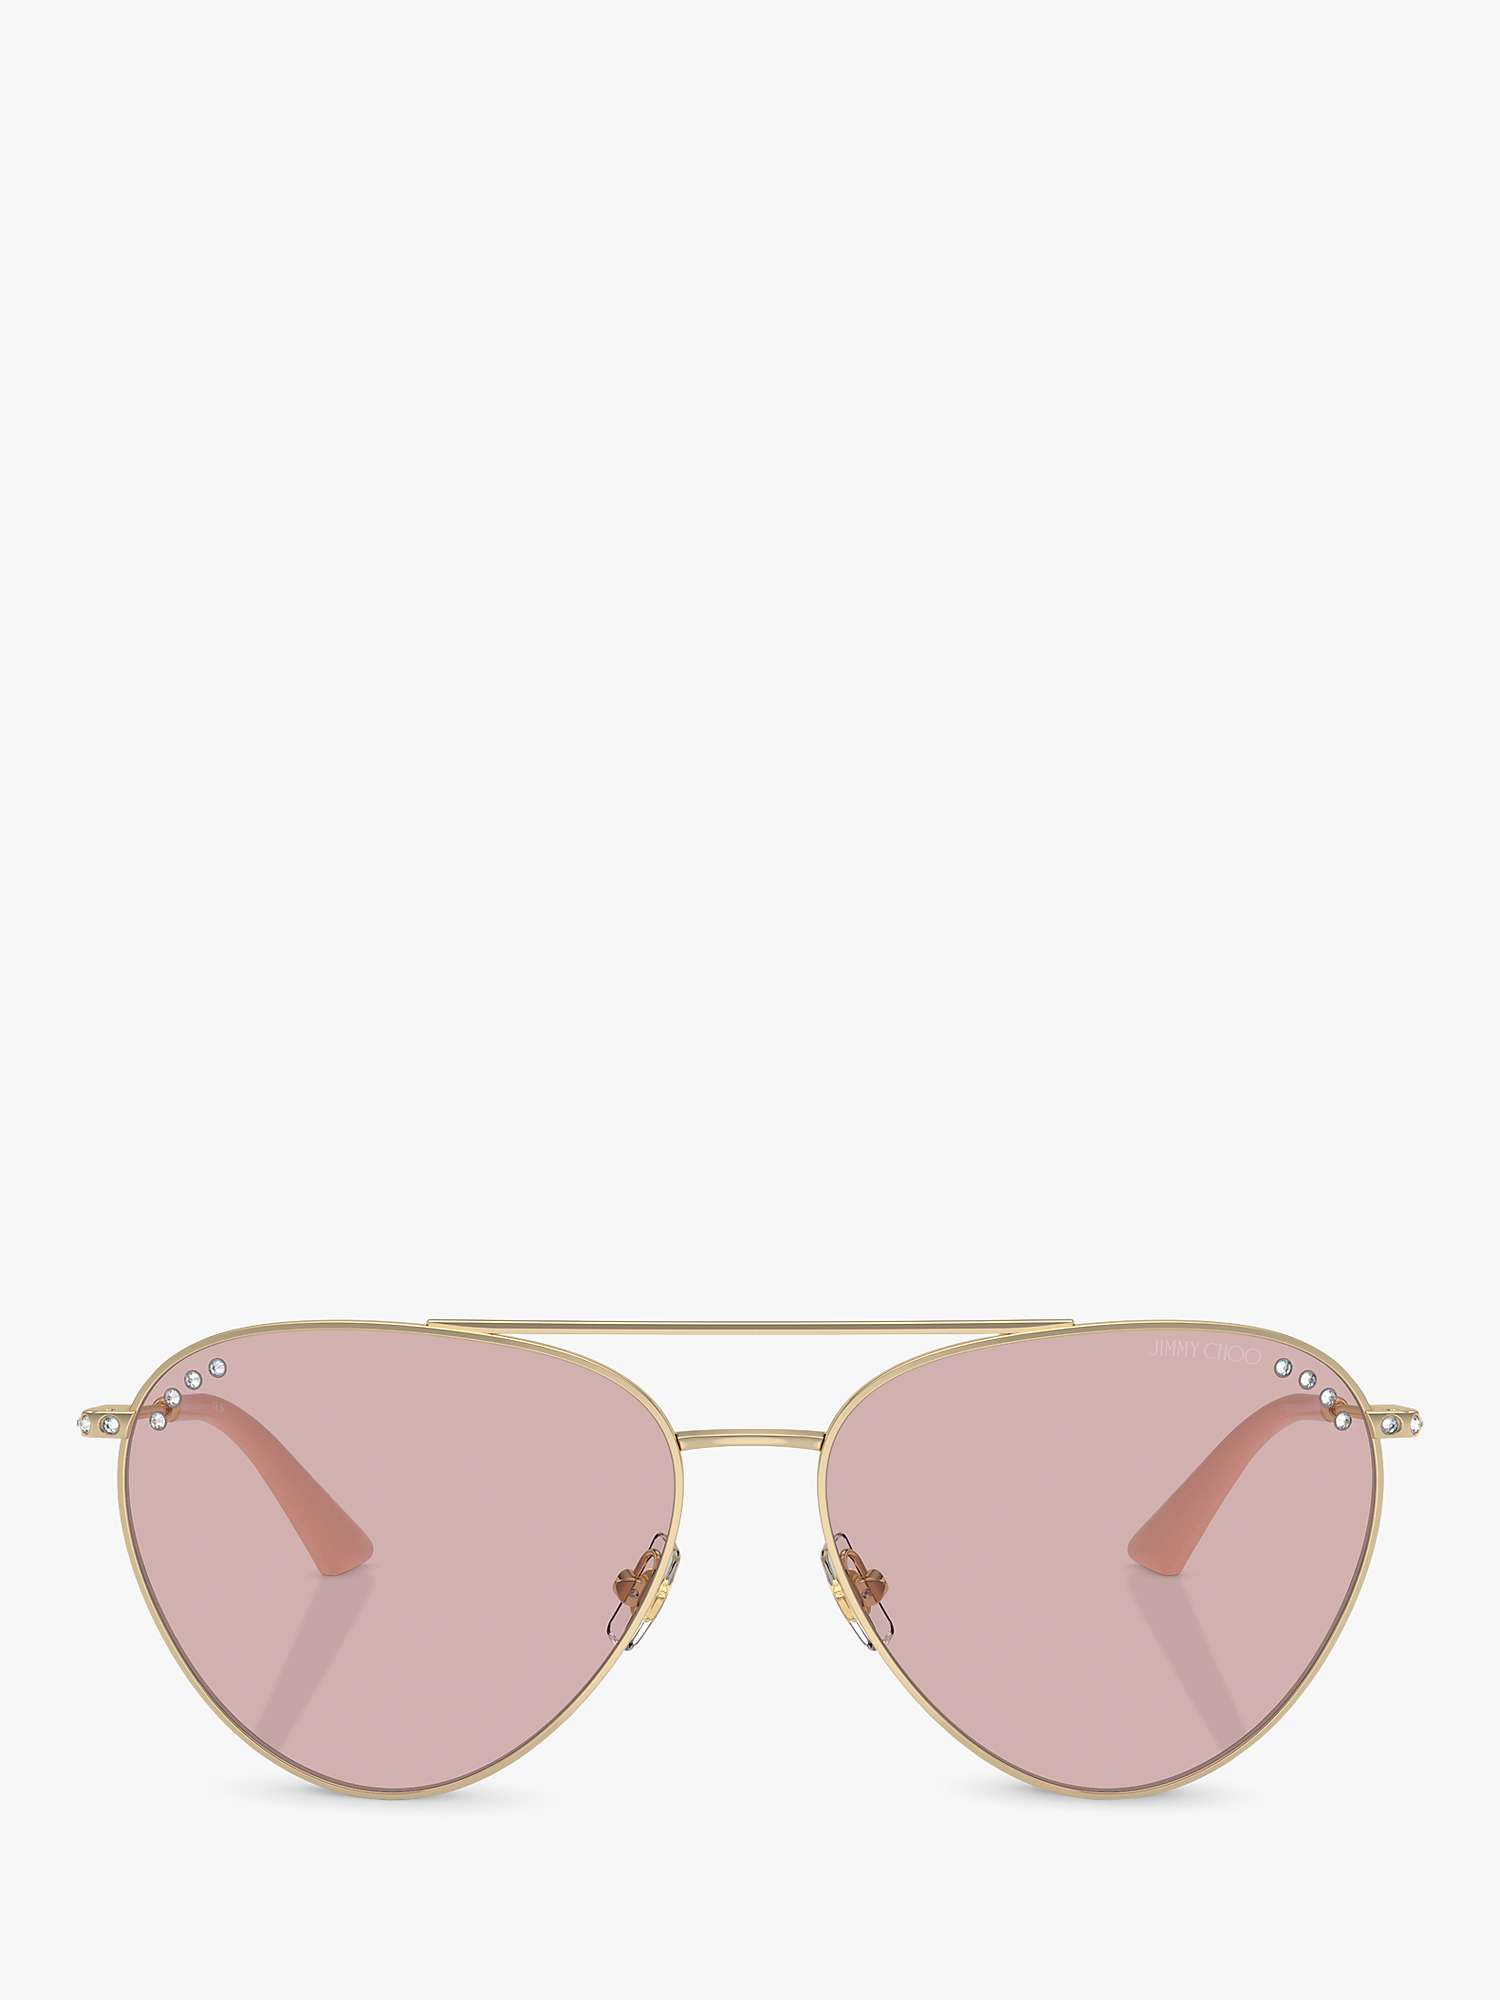 Buy Jimmy Choo JC4002B Women's Aviator Sunglasses, Pale Gold/Pink Online at johnlewis.com